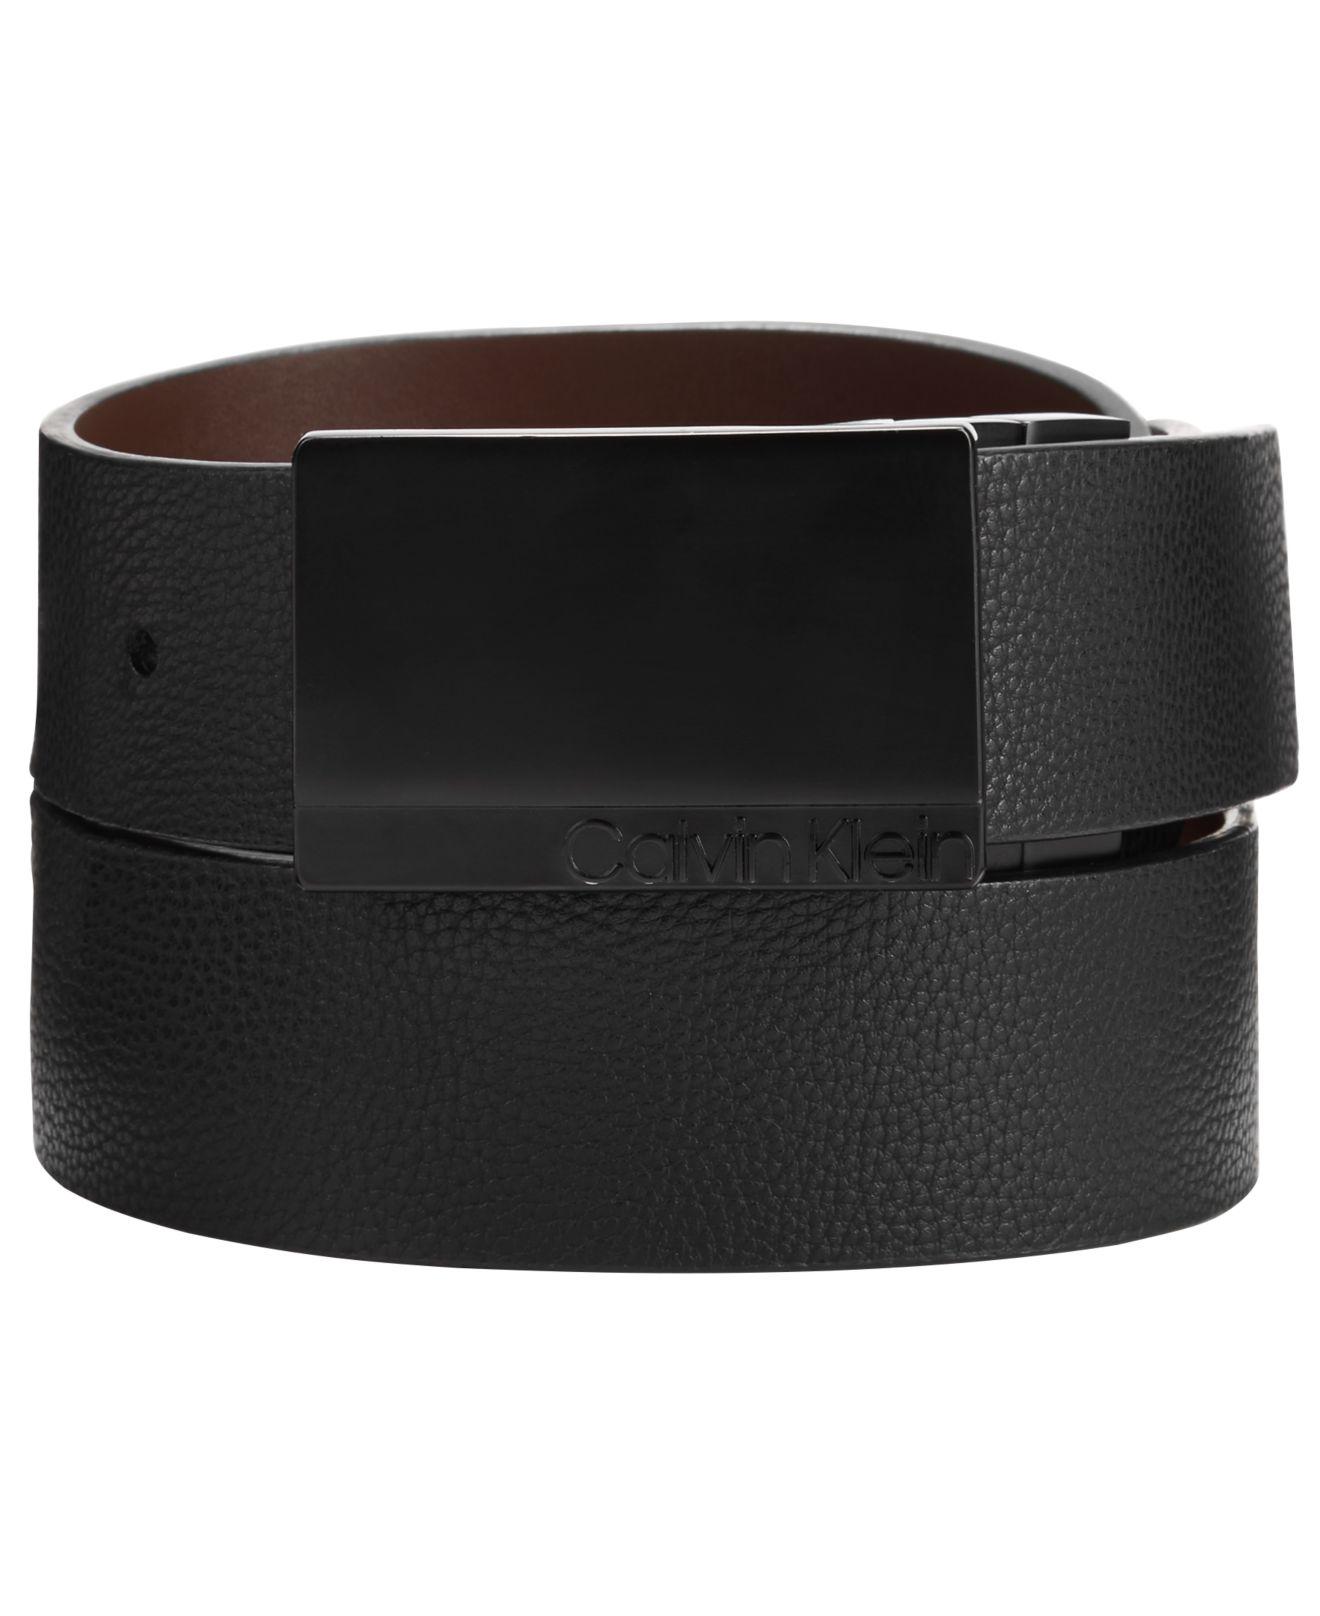 Calvin Klein Reversible Pebble Leather Plaque Belt in Black for Men - Lyst